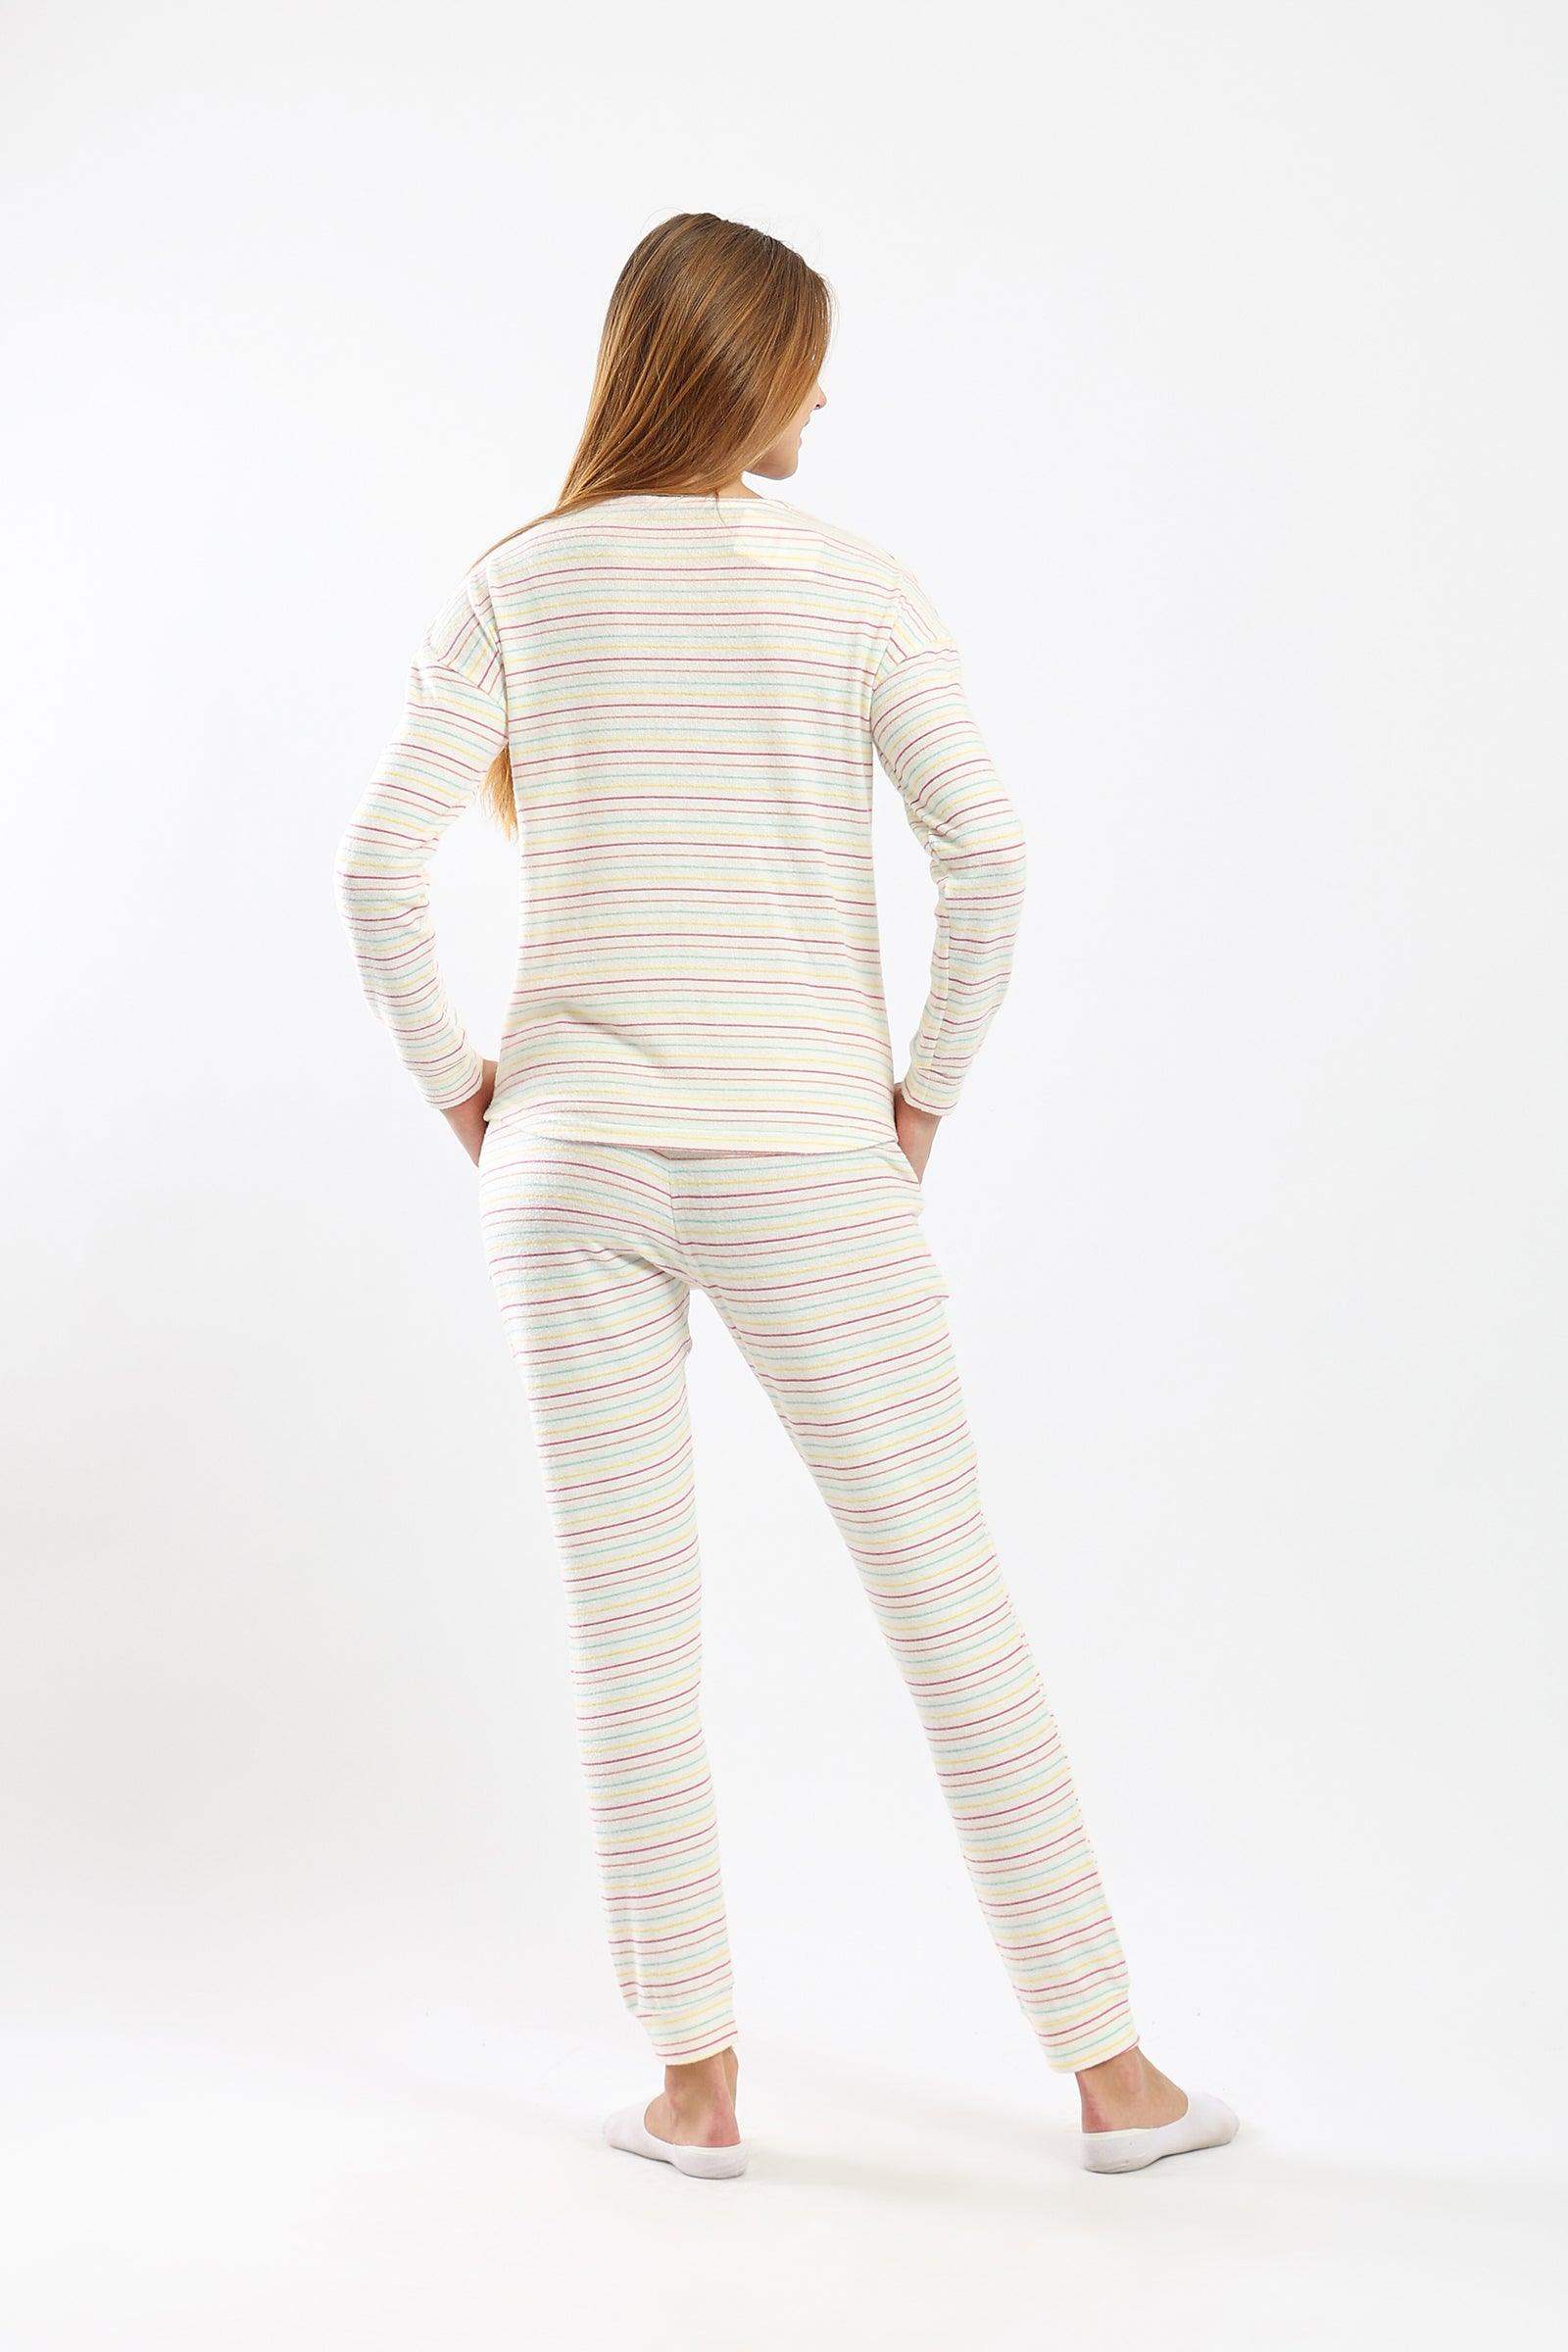 Pyjama Set with Colored Stripes - Carina - كارينا